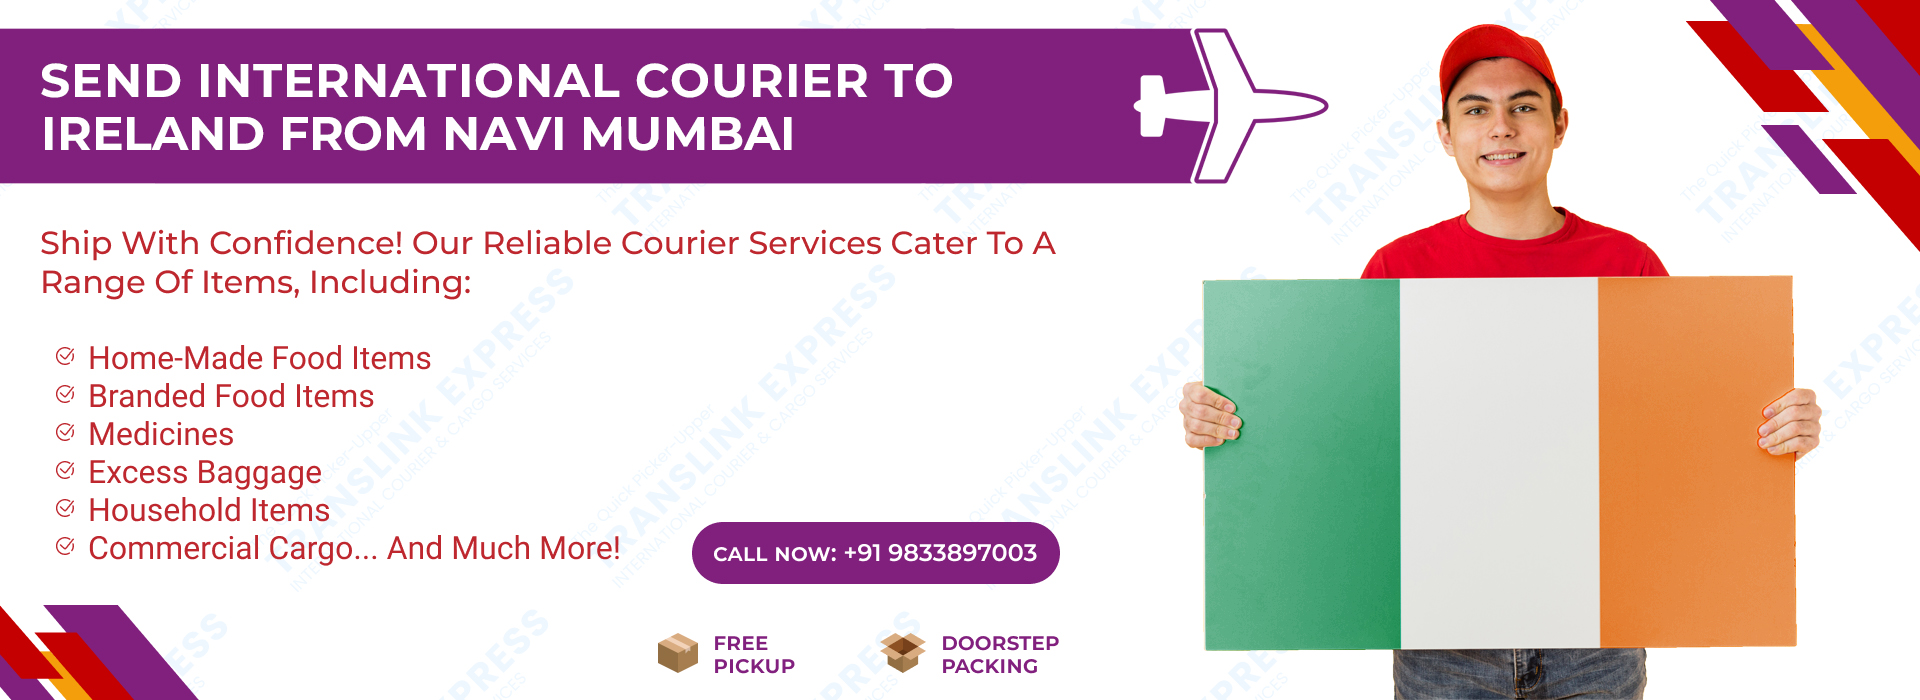 Courier to Ireland From Navi Mumbai